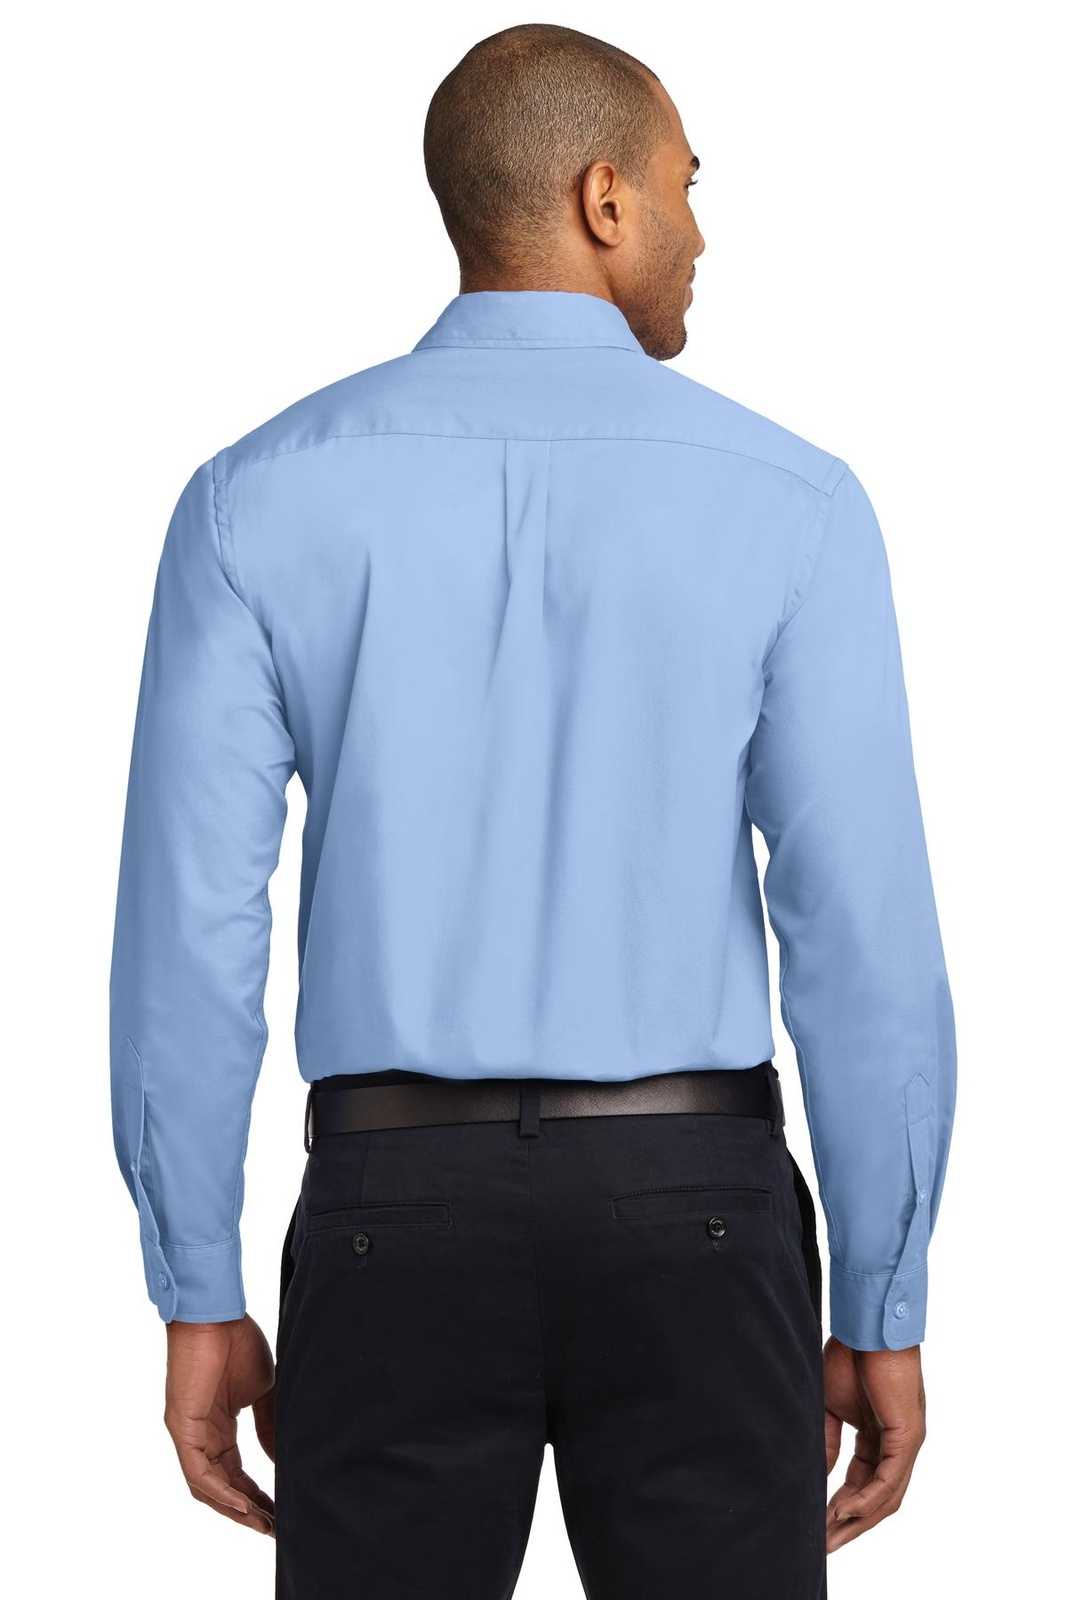 Port Authority TLS608 Tall Long Sleeve Easy Care Shirt - Light Blue Light Stone - HIT a Double - 1